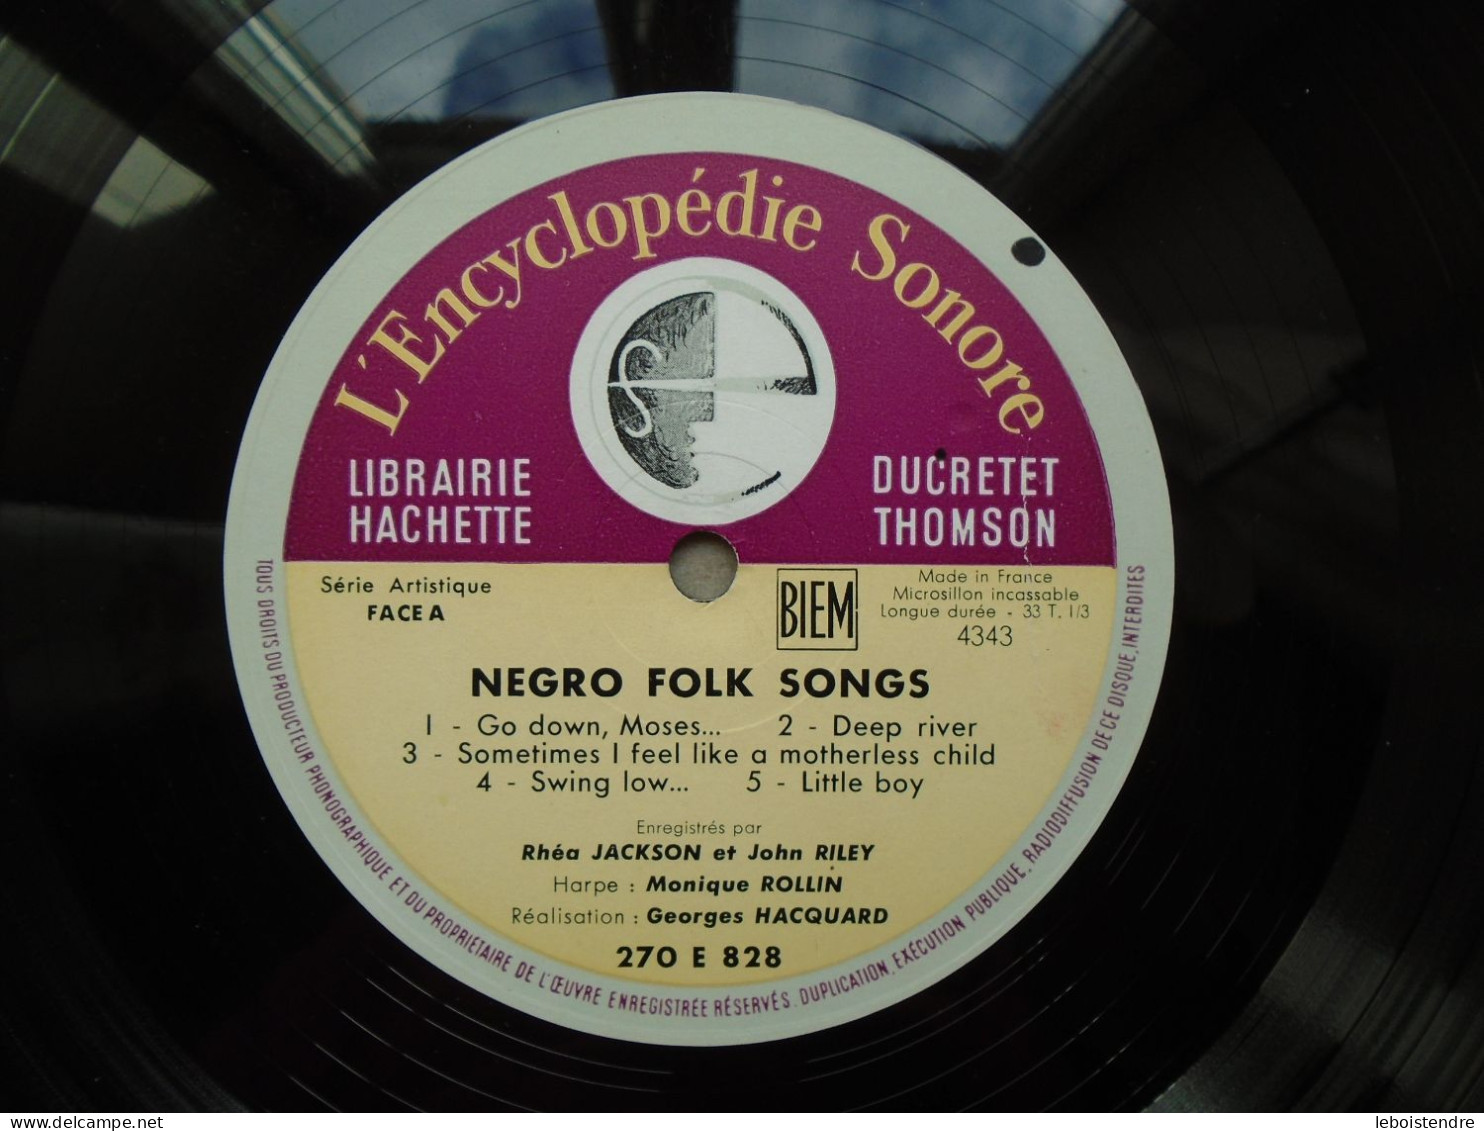 10" VINYLE NEGRO FOLK SONGS 270E828 + LIVRET L ENCYCLOPEDIE SONORE LIBRAIRIE HACHETTE RHEA JACKSON JOHN RILEY - Formati Speciali